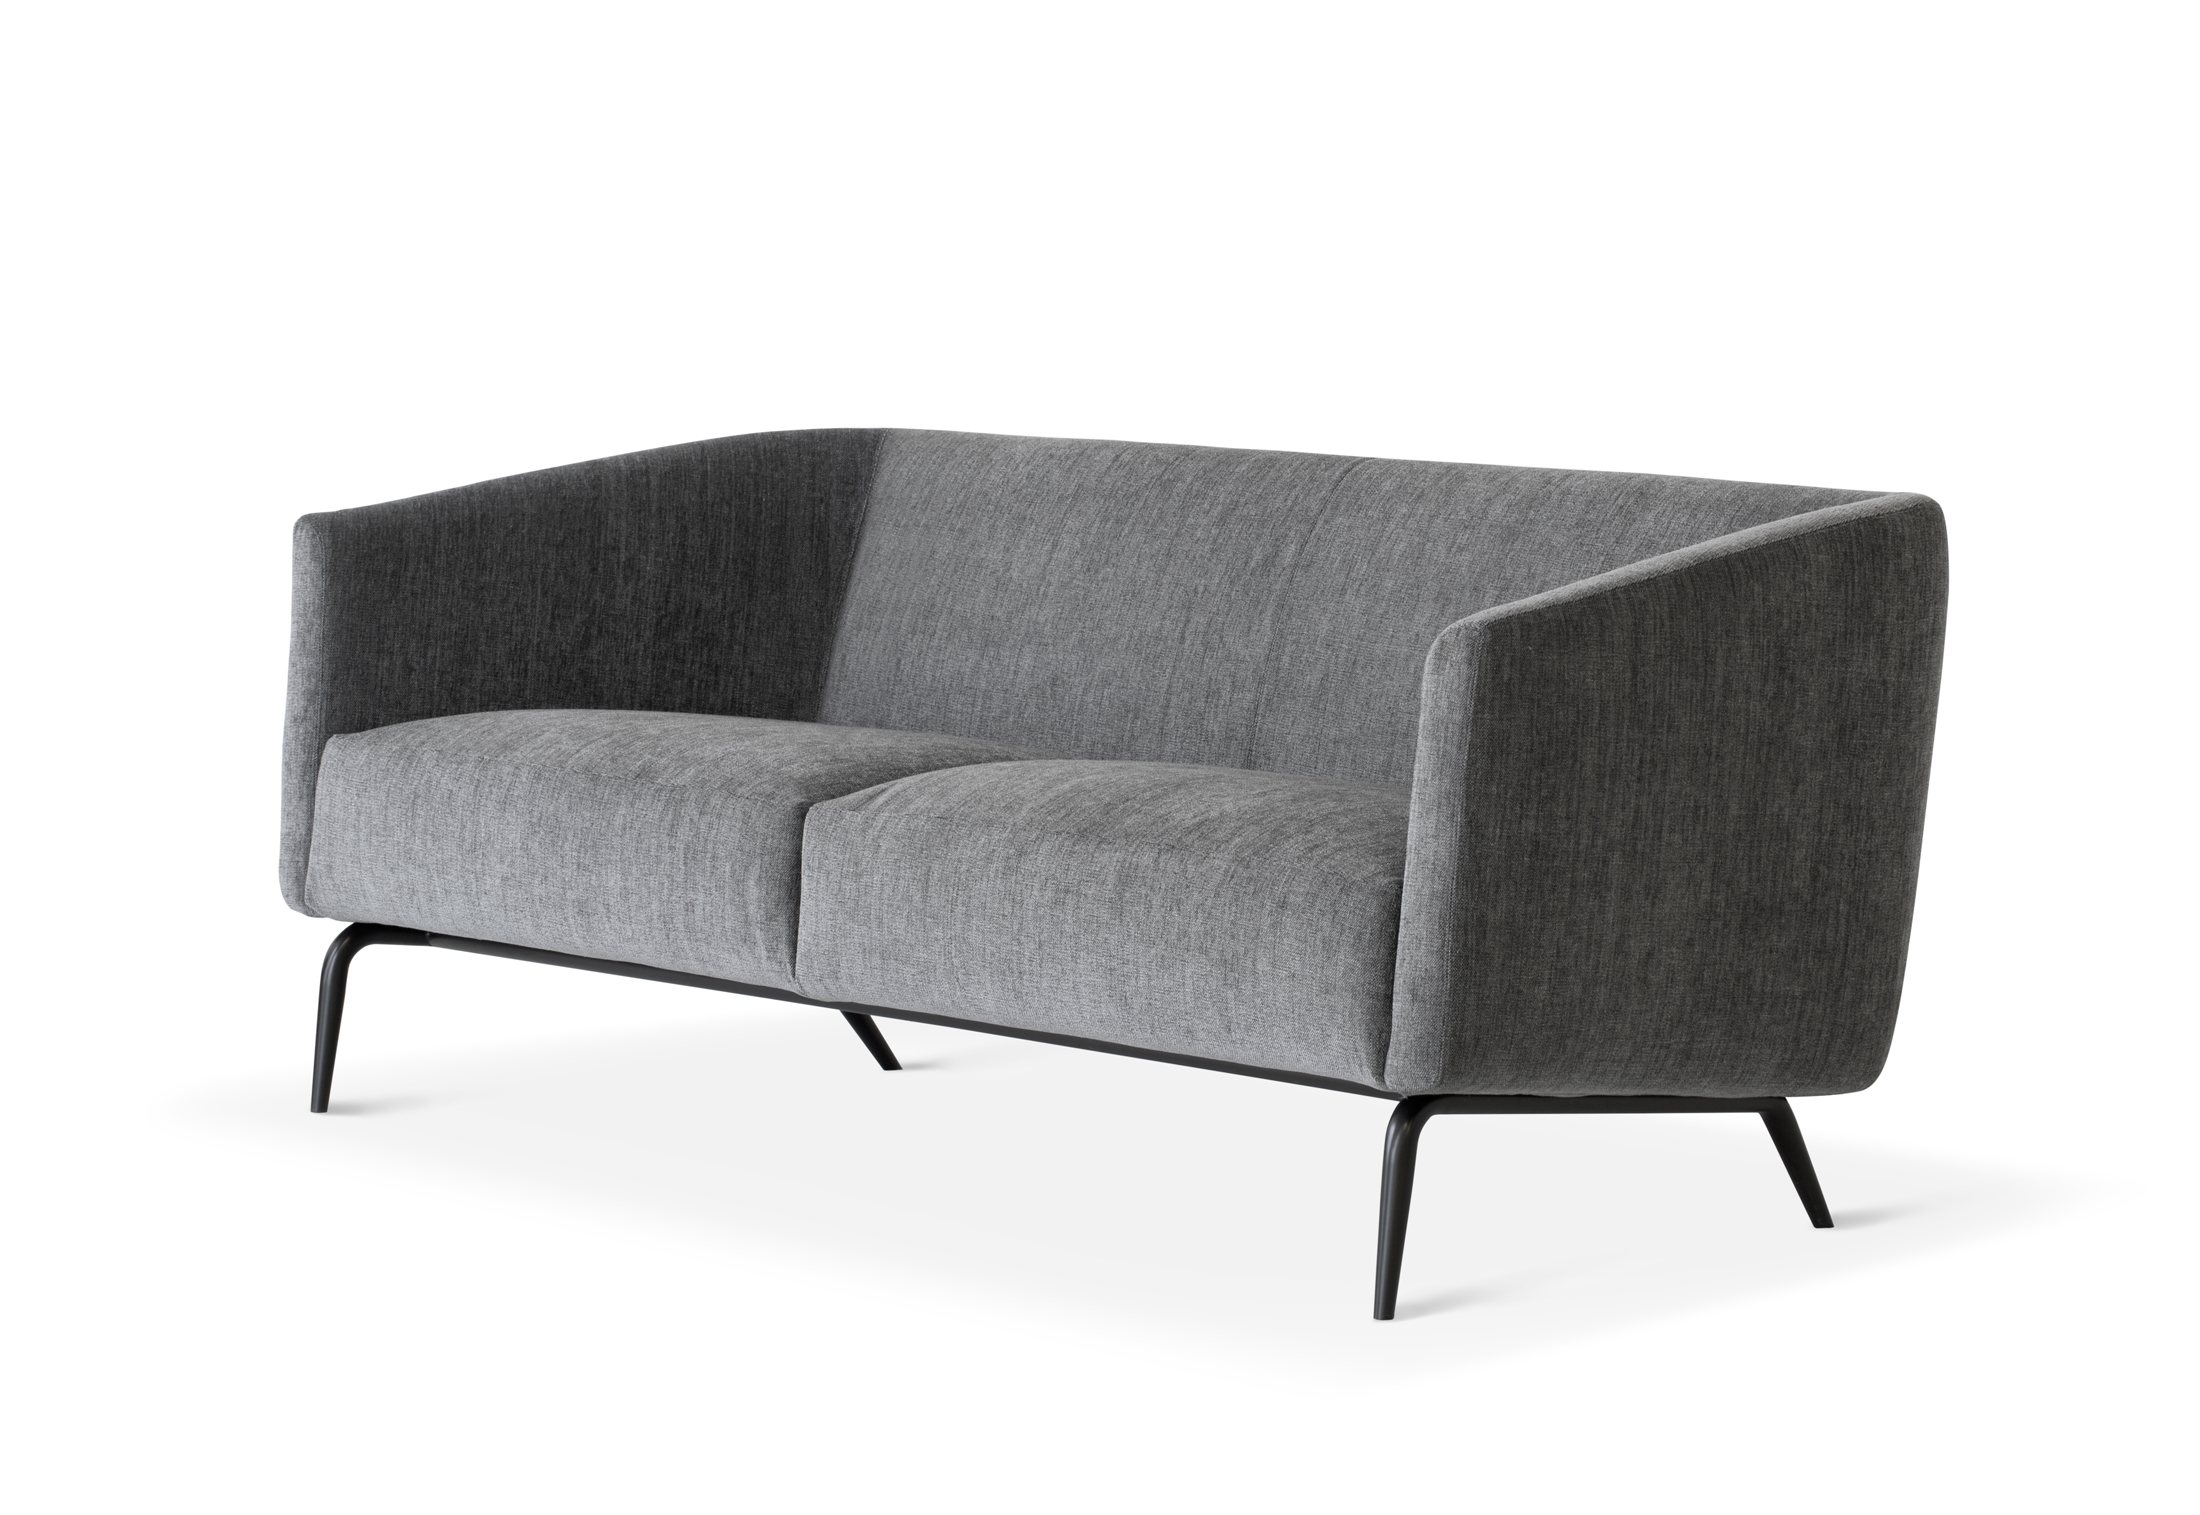 KAIWA Sofa by Matteo Nunziati for Lema